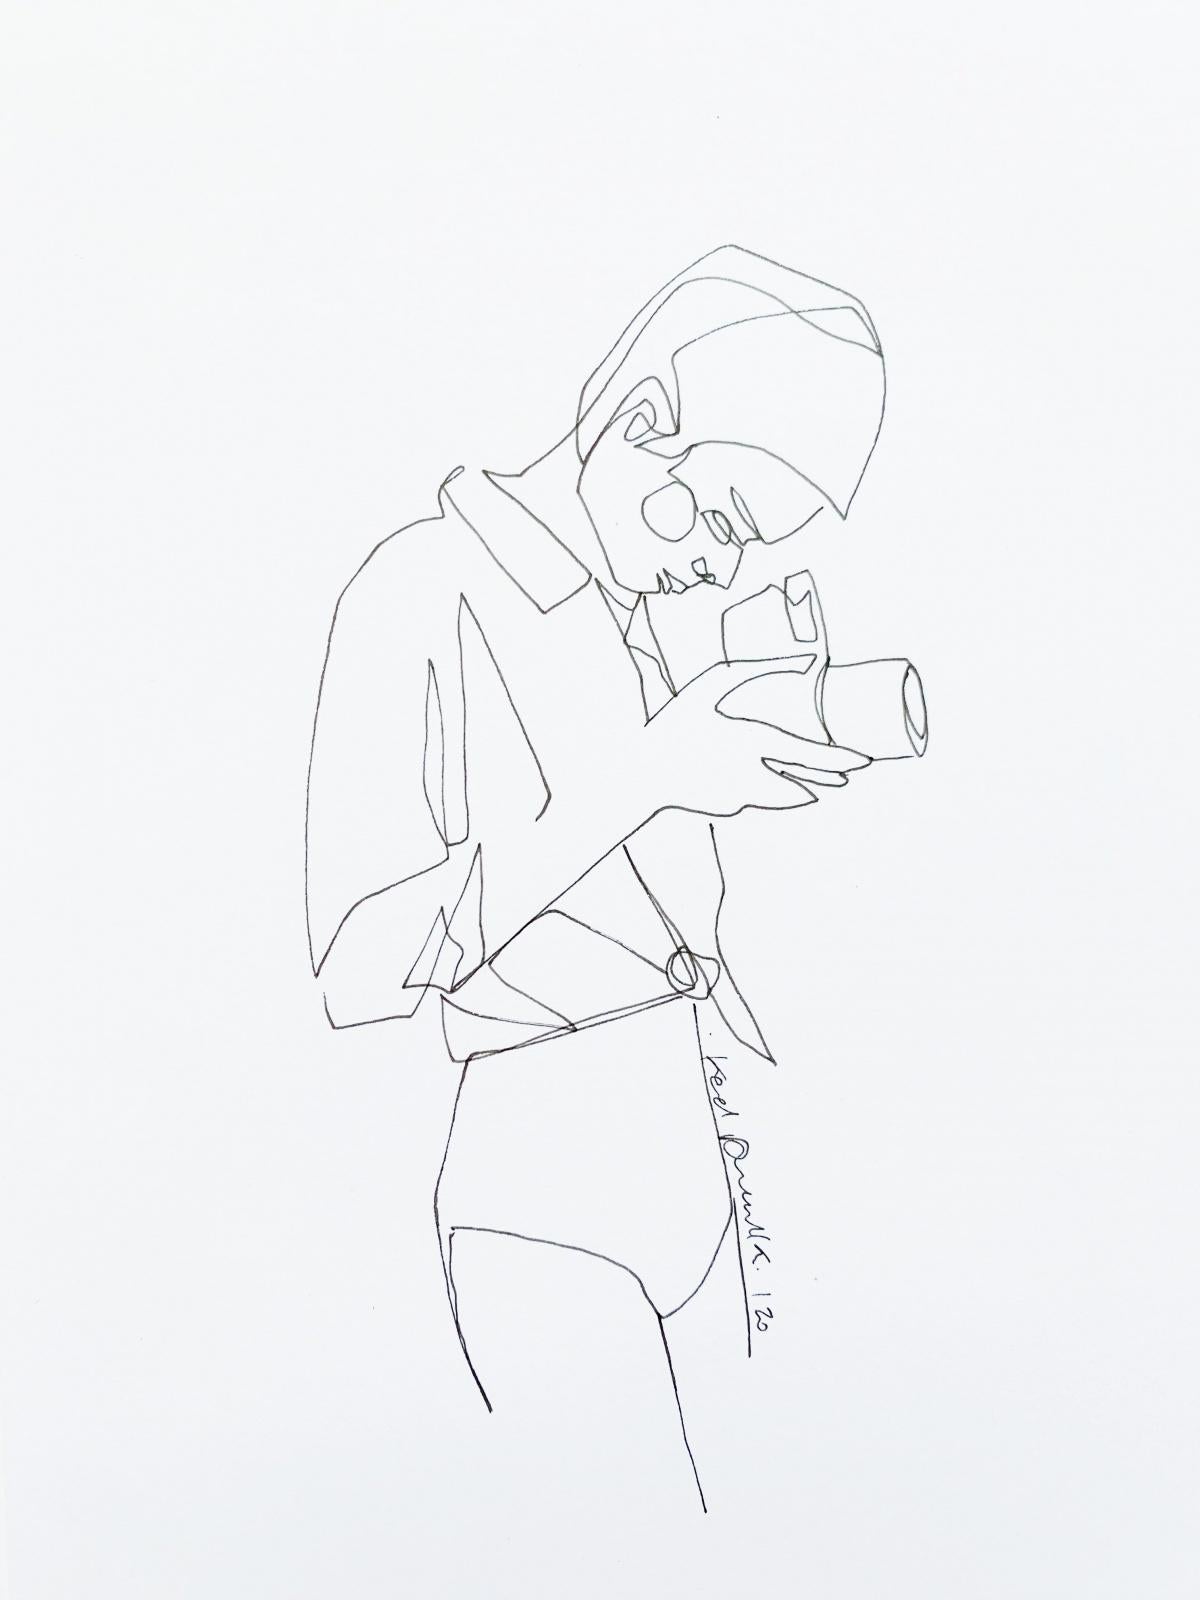 Karol Drzewiecki Figurative Art - Untitled - Drawing, Young artist, Minimalistic, Black & white, single line